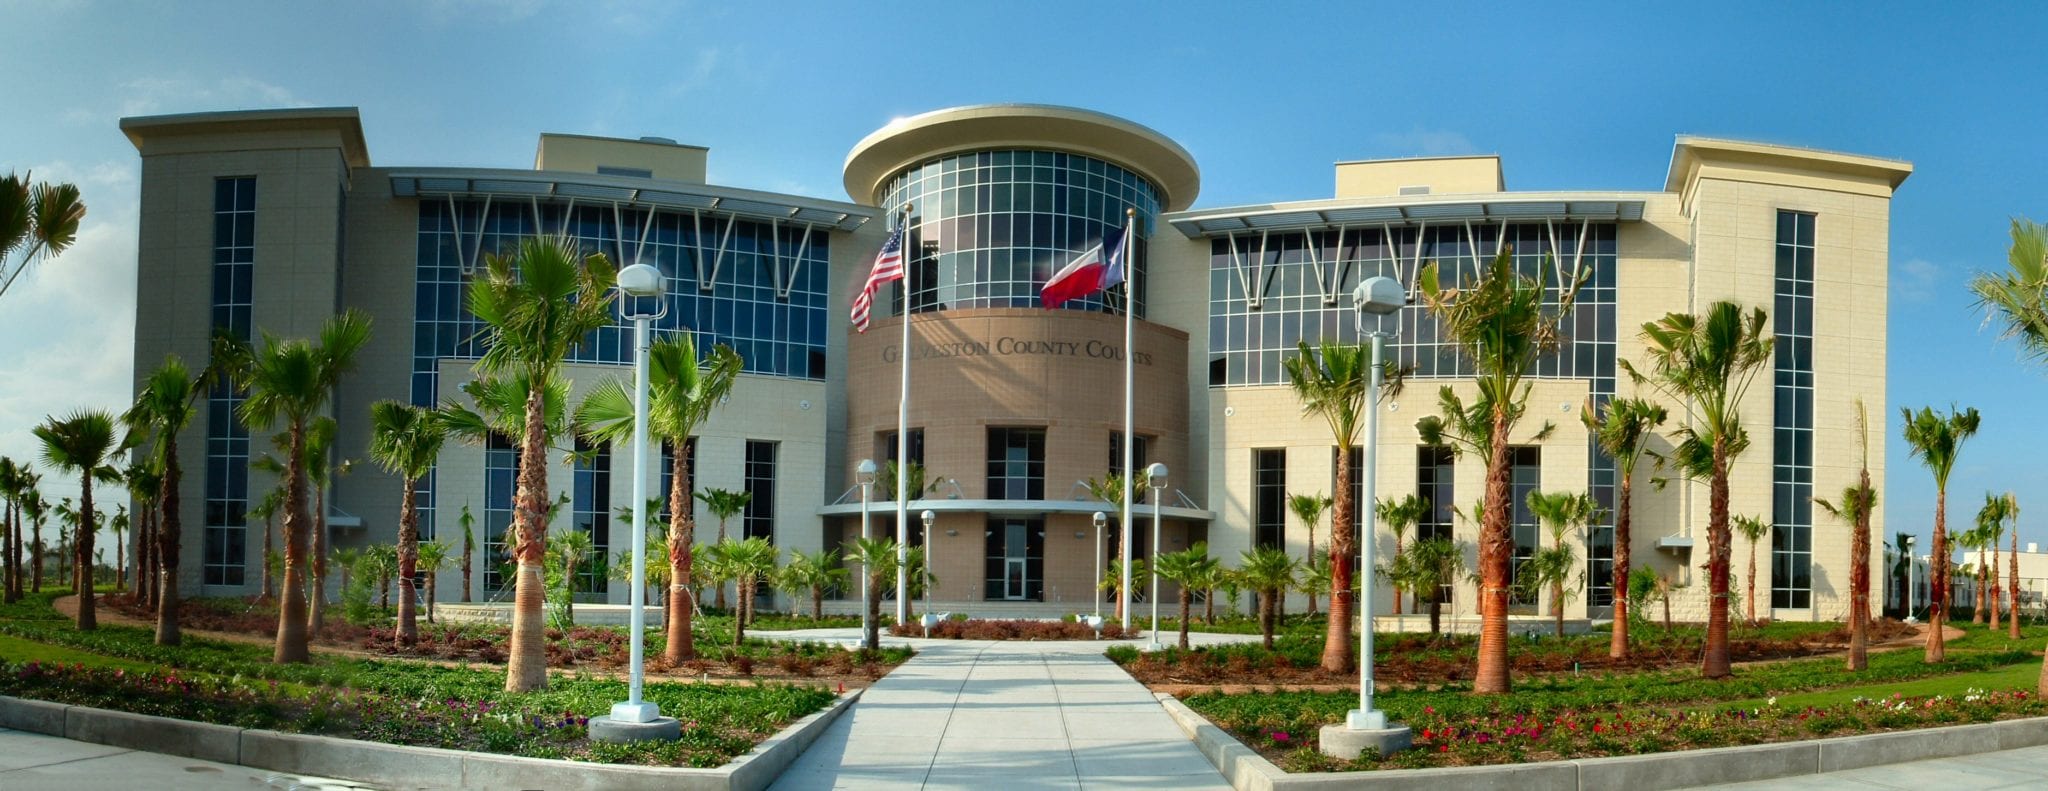 Galveston_County_Justice_Center